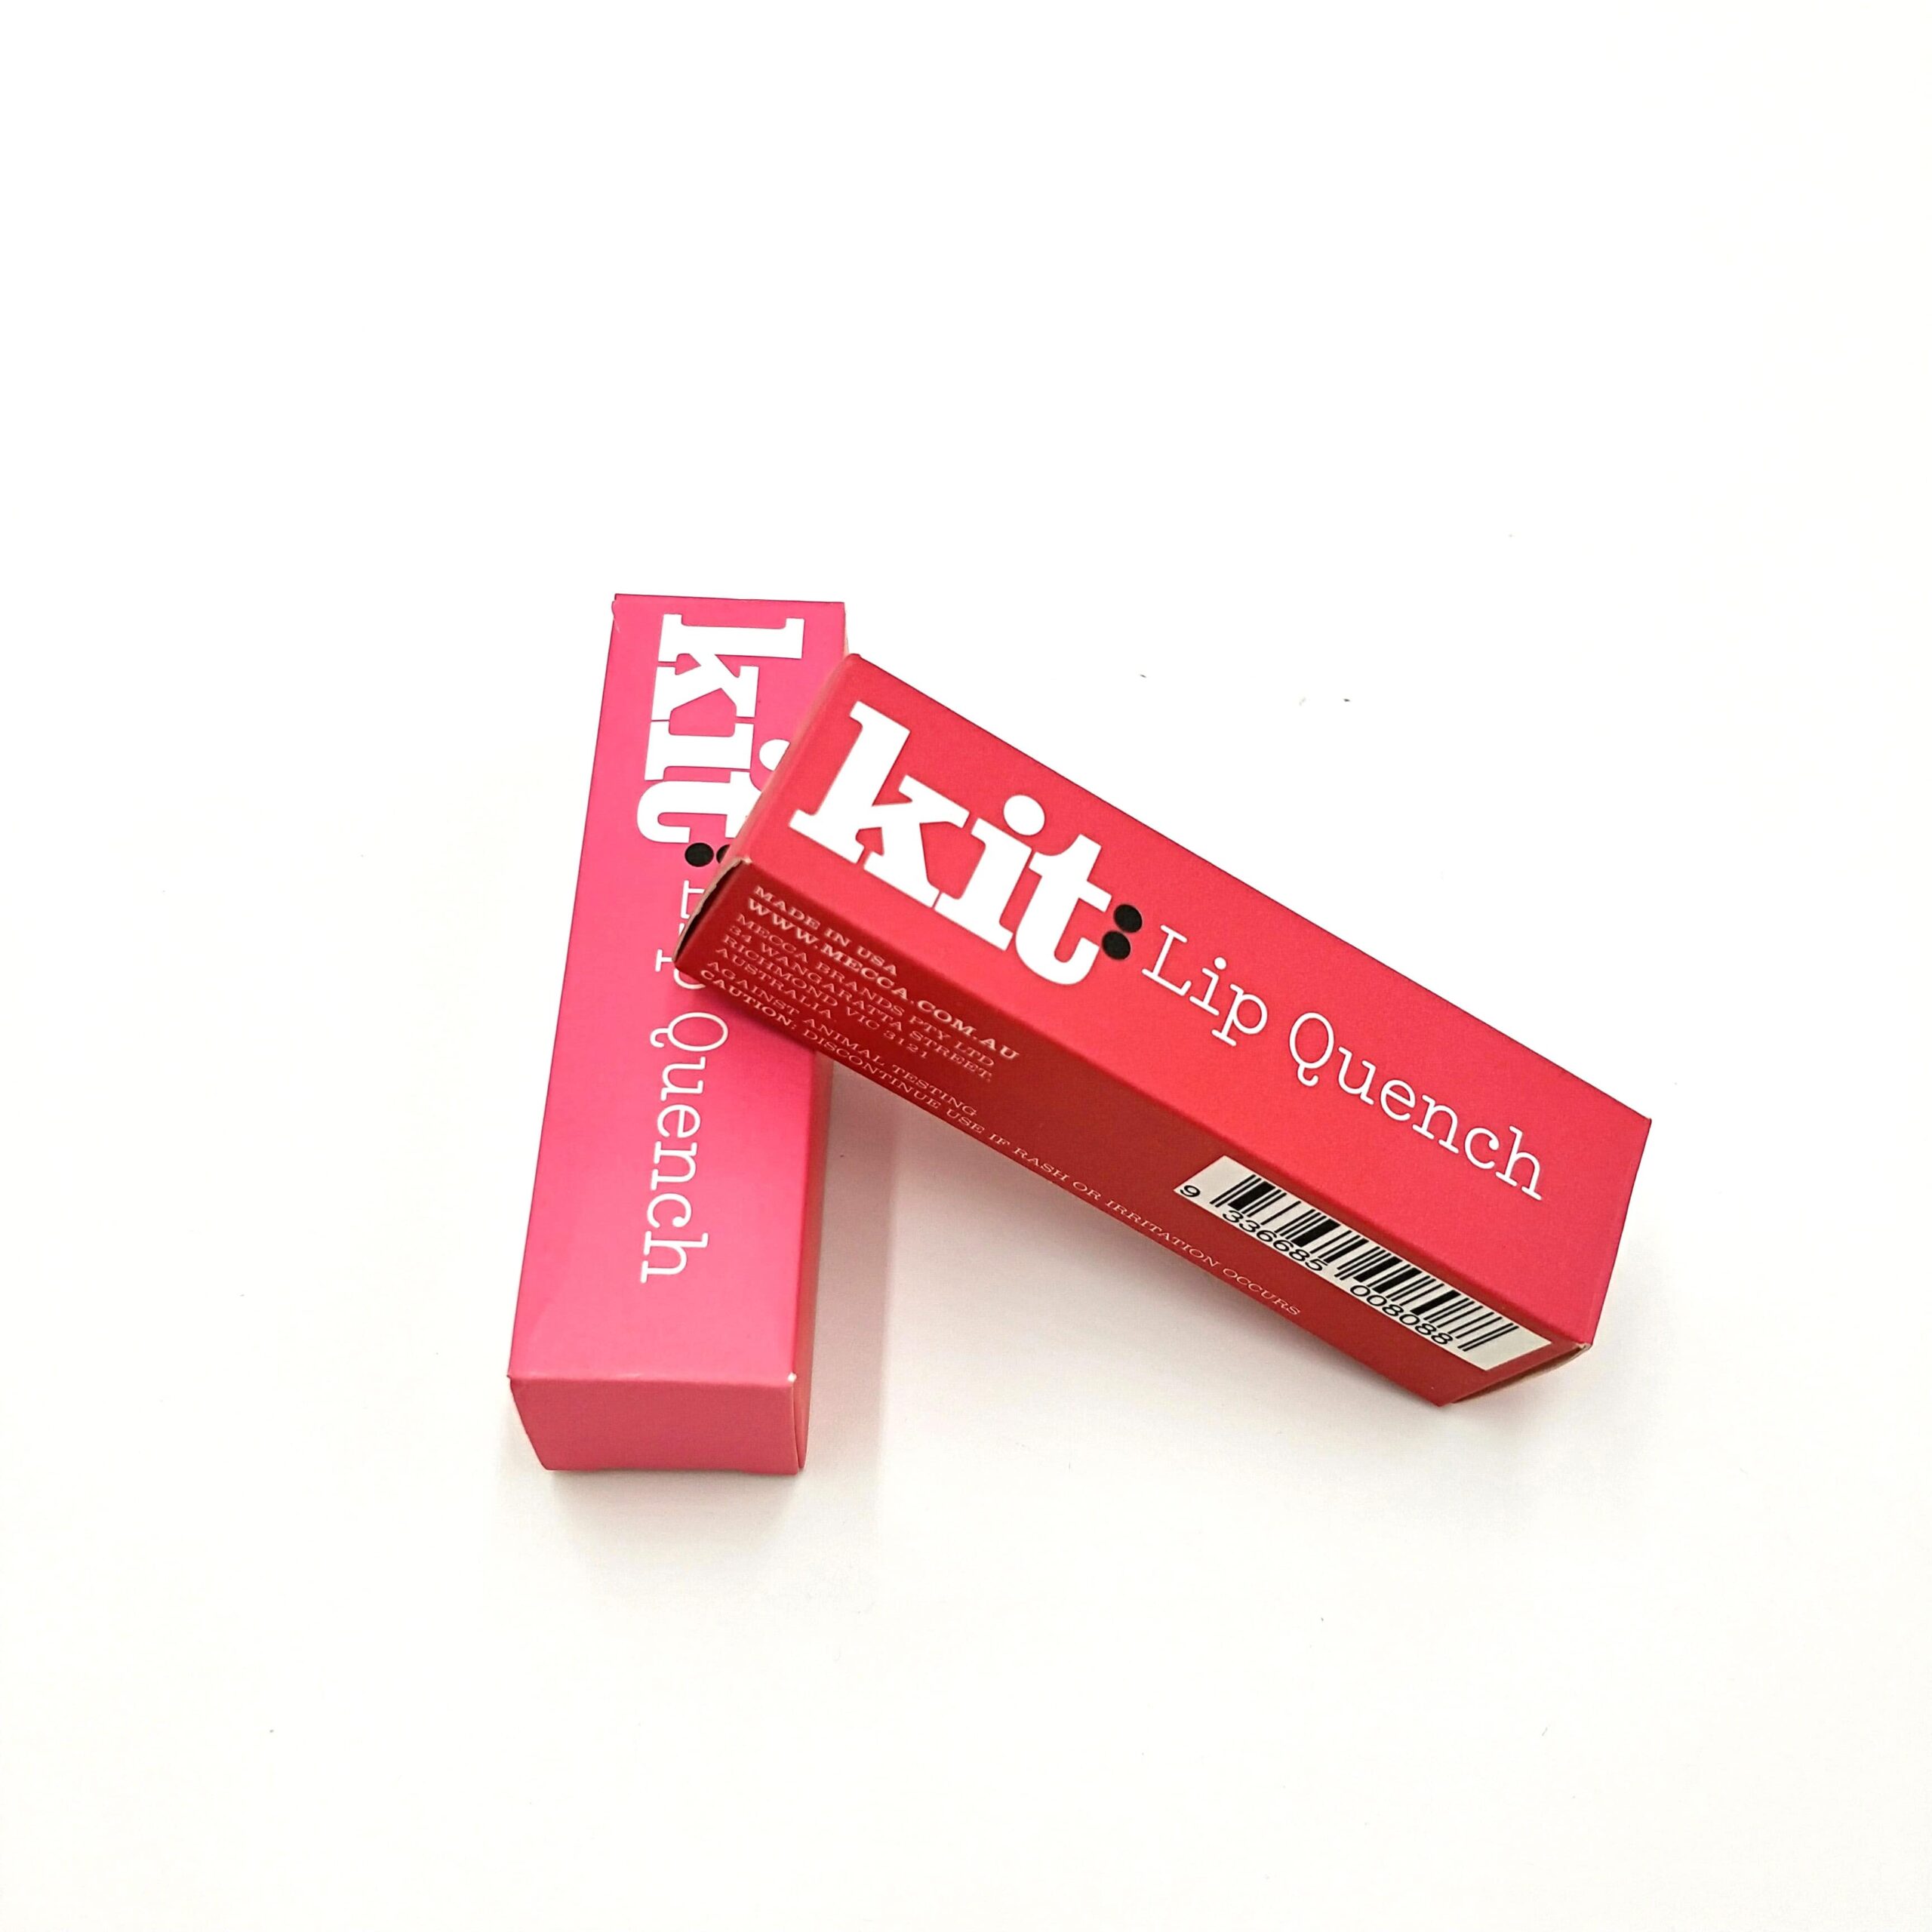 custom lipstick boxes